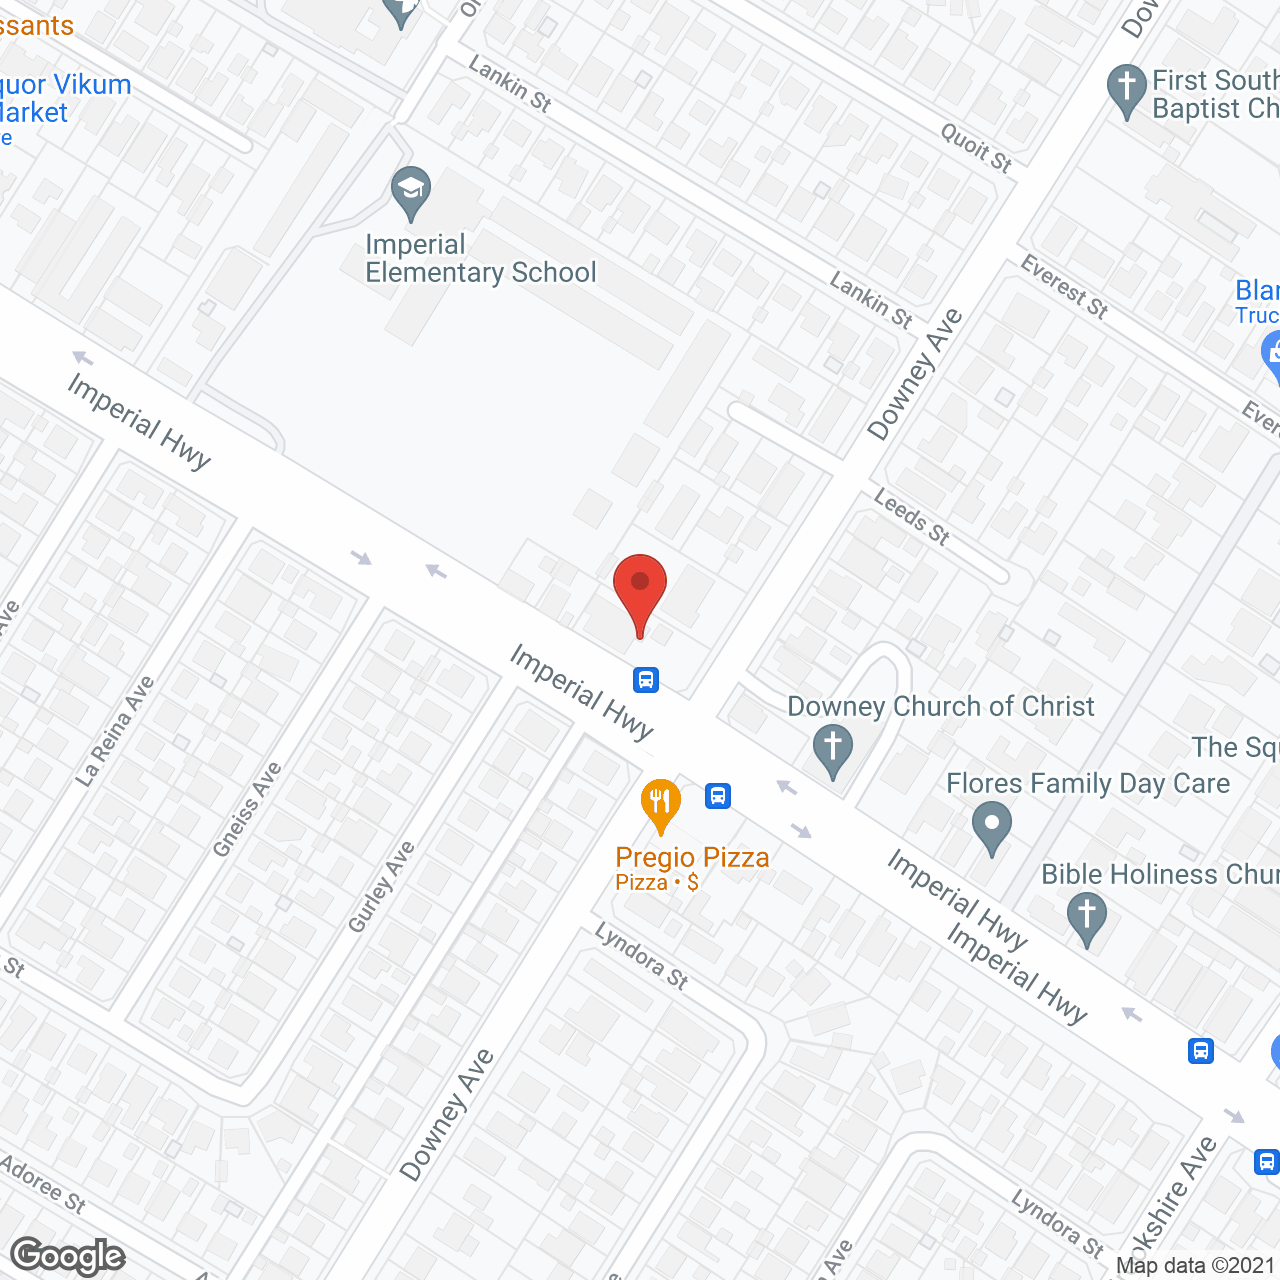 The Villa in google map